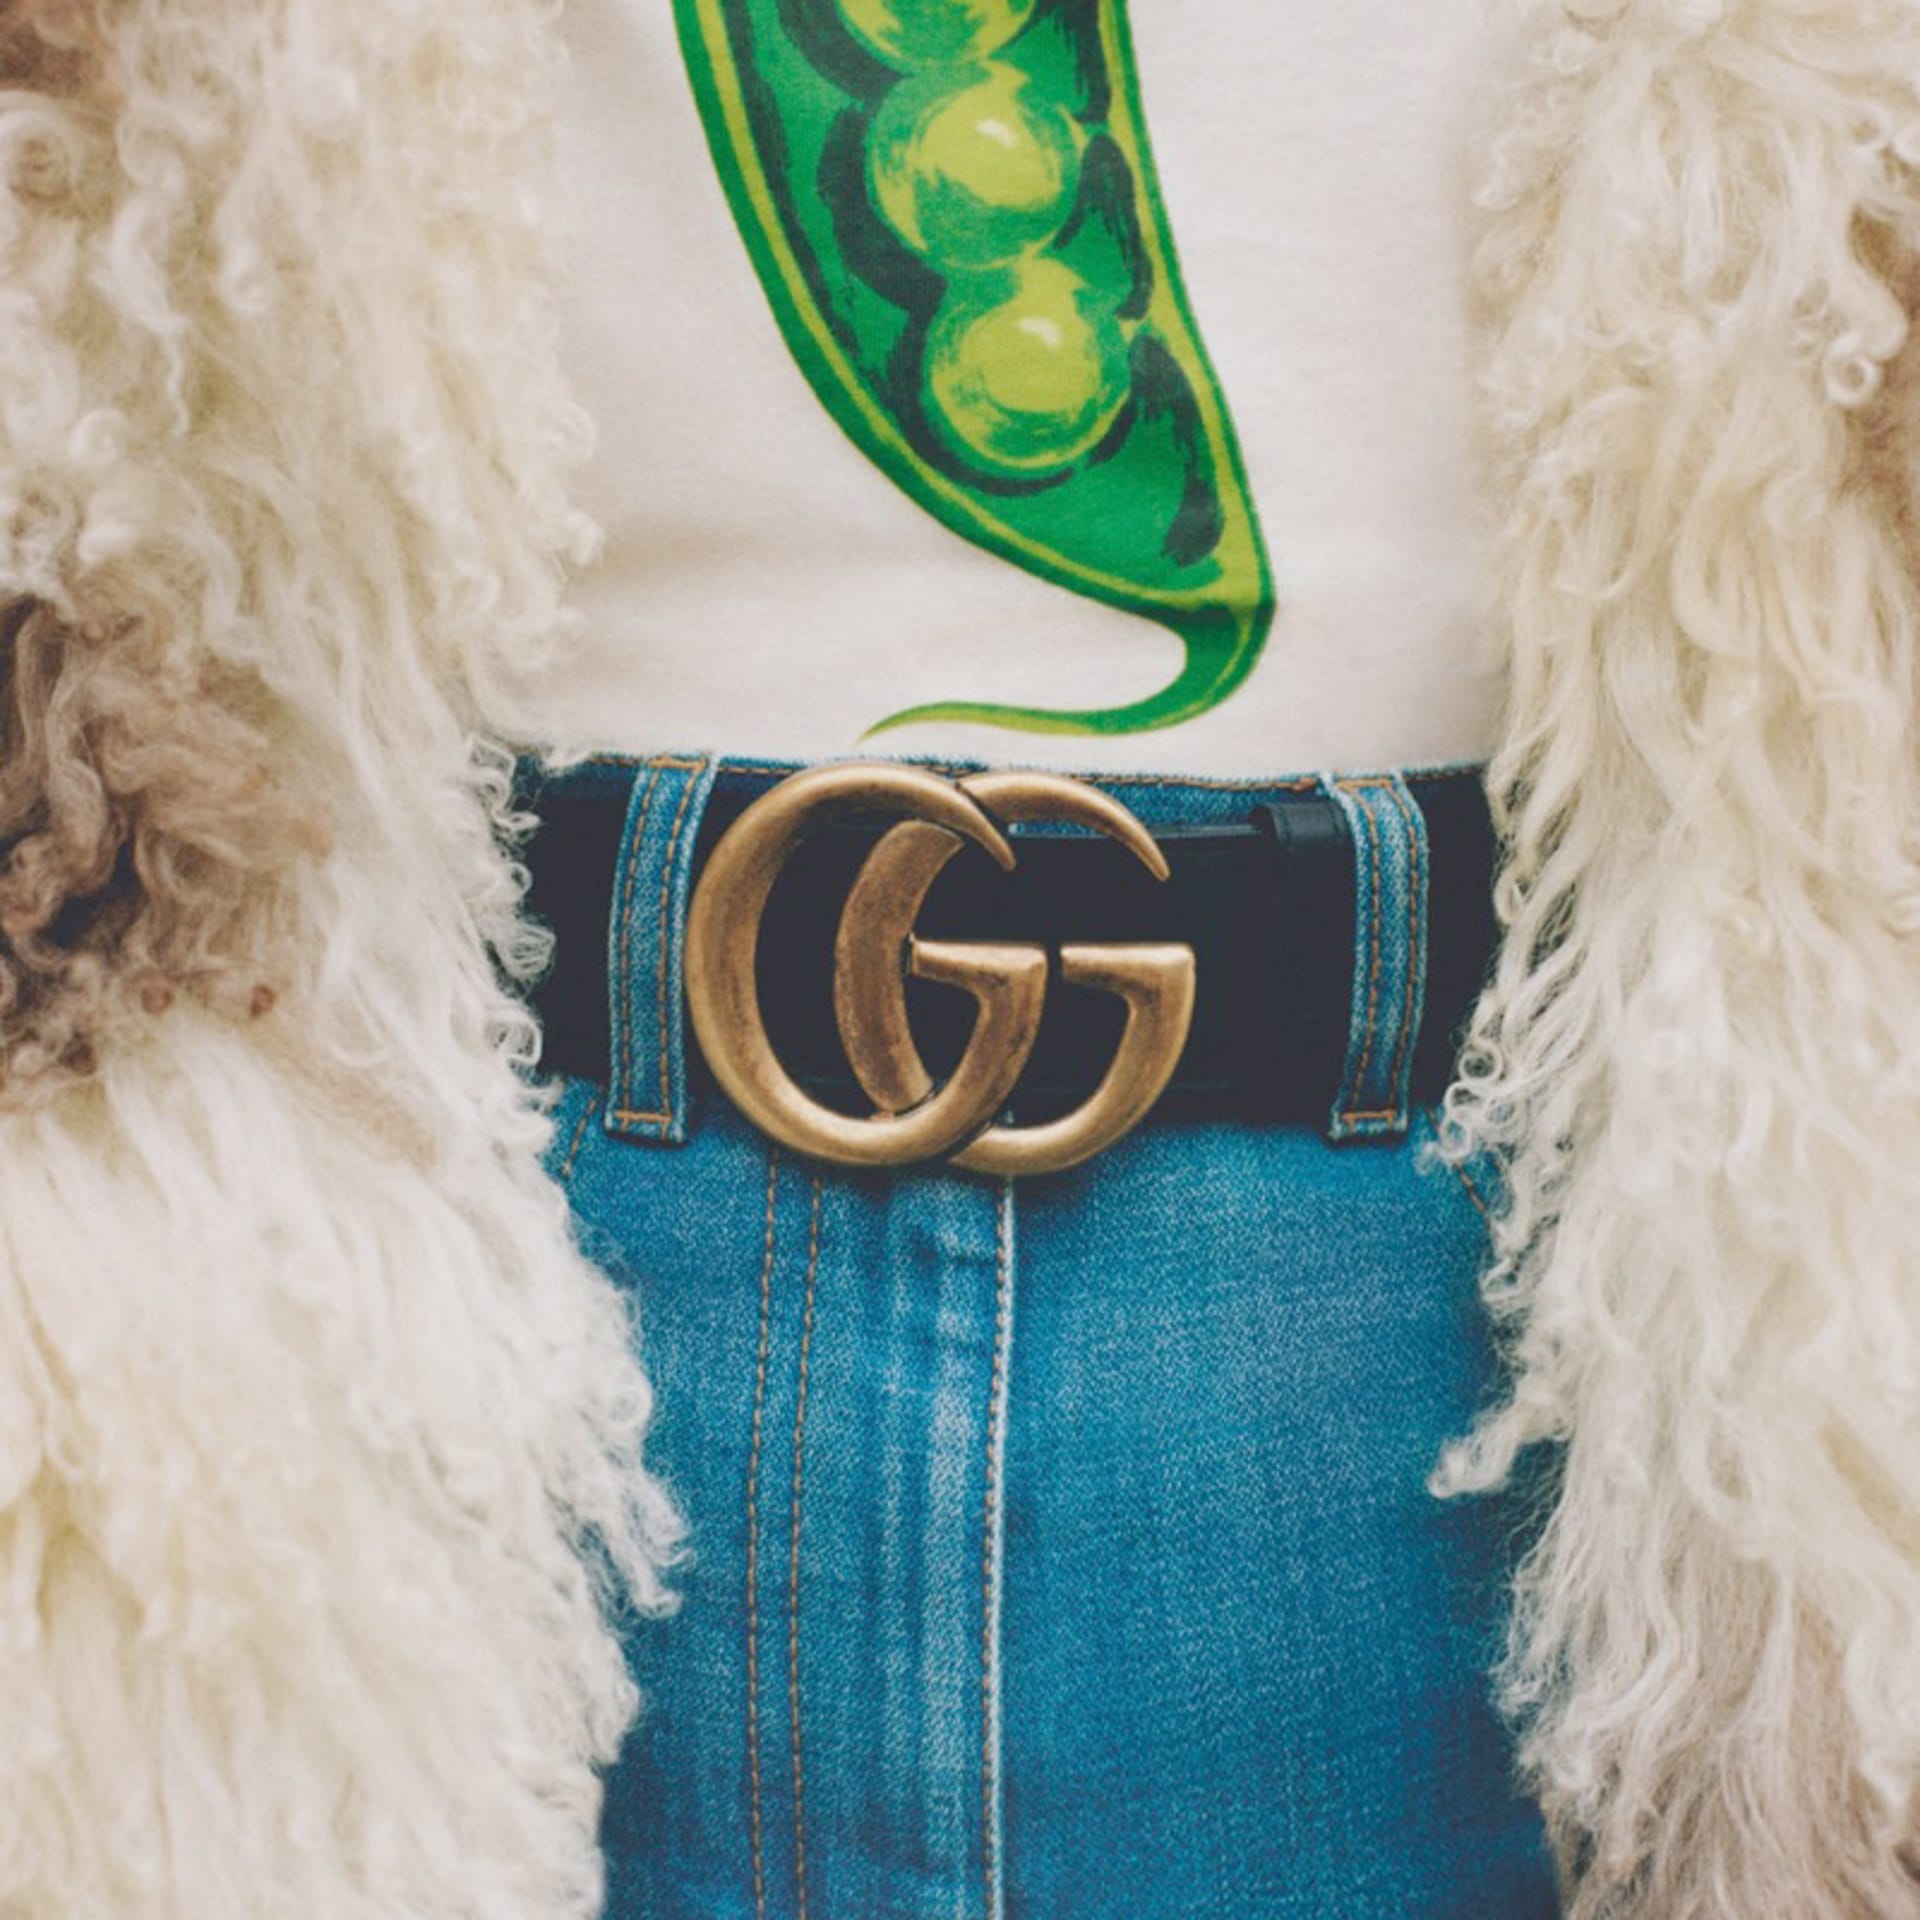 Ikonické propletené logo s dvěma písmeny G odkazuje na jméno Guccio Gucci.